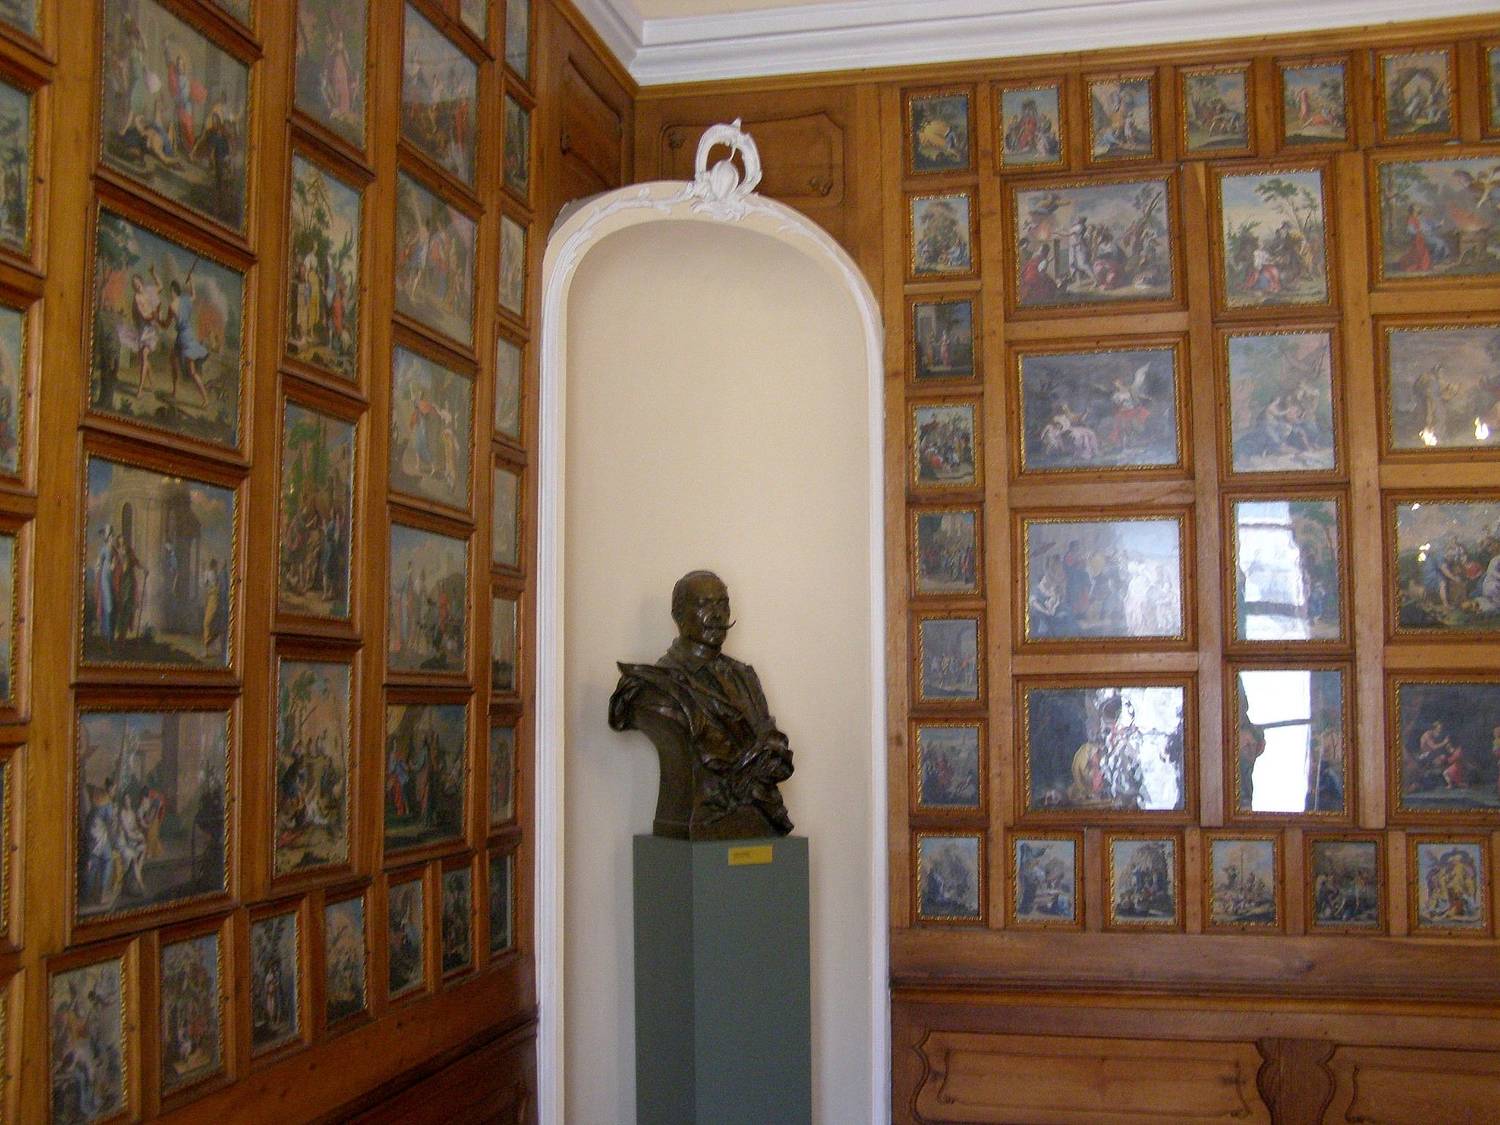 Galéria mesta Bratislavy